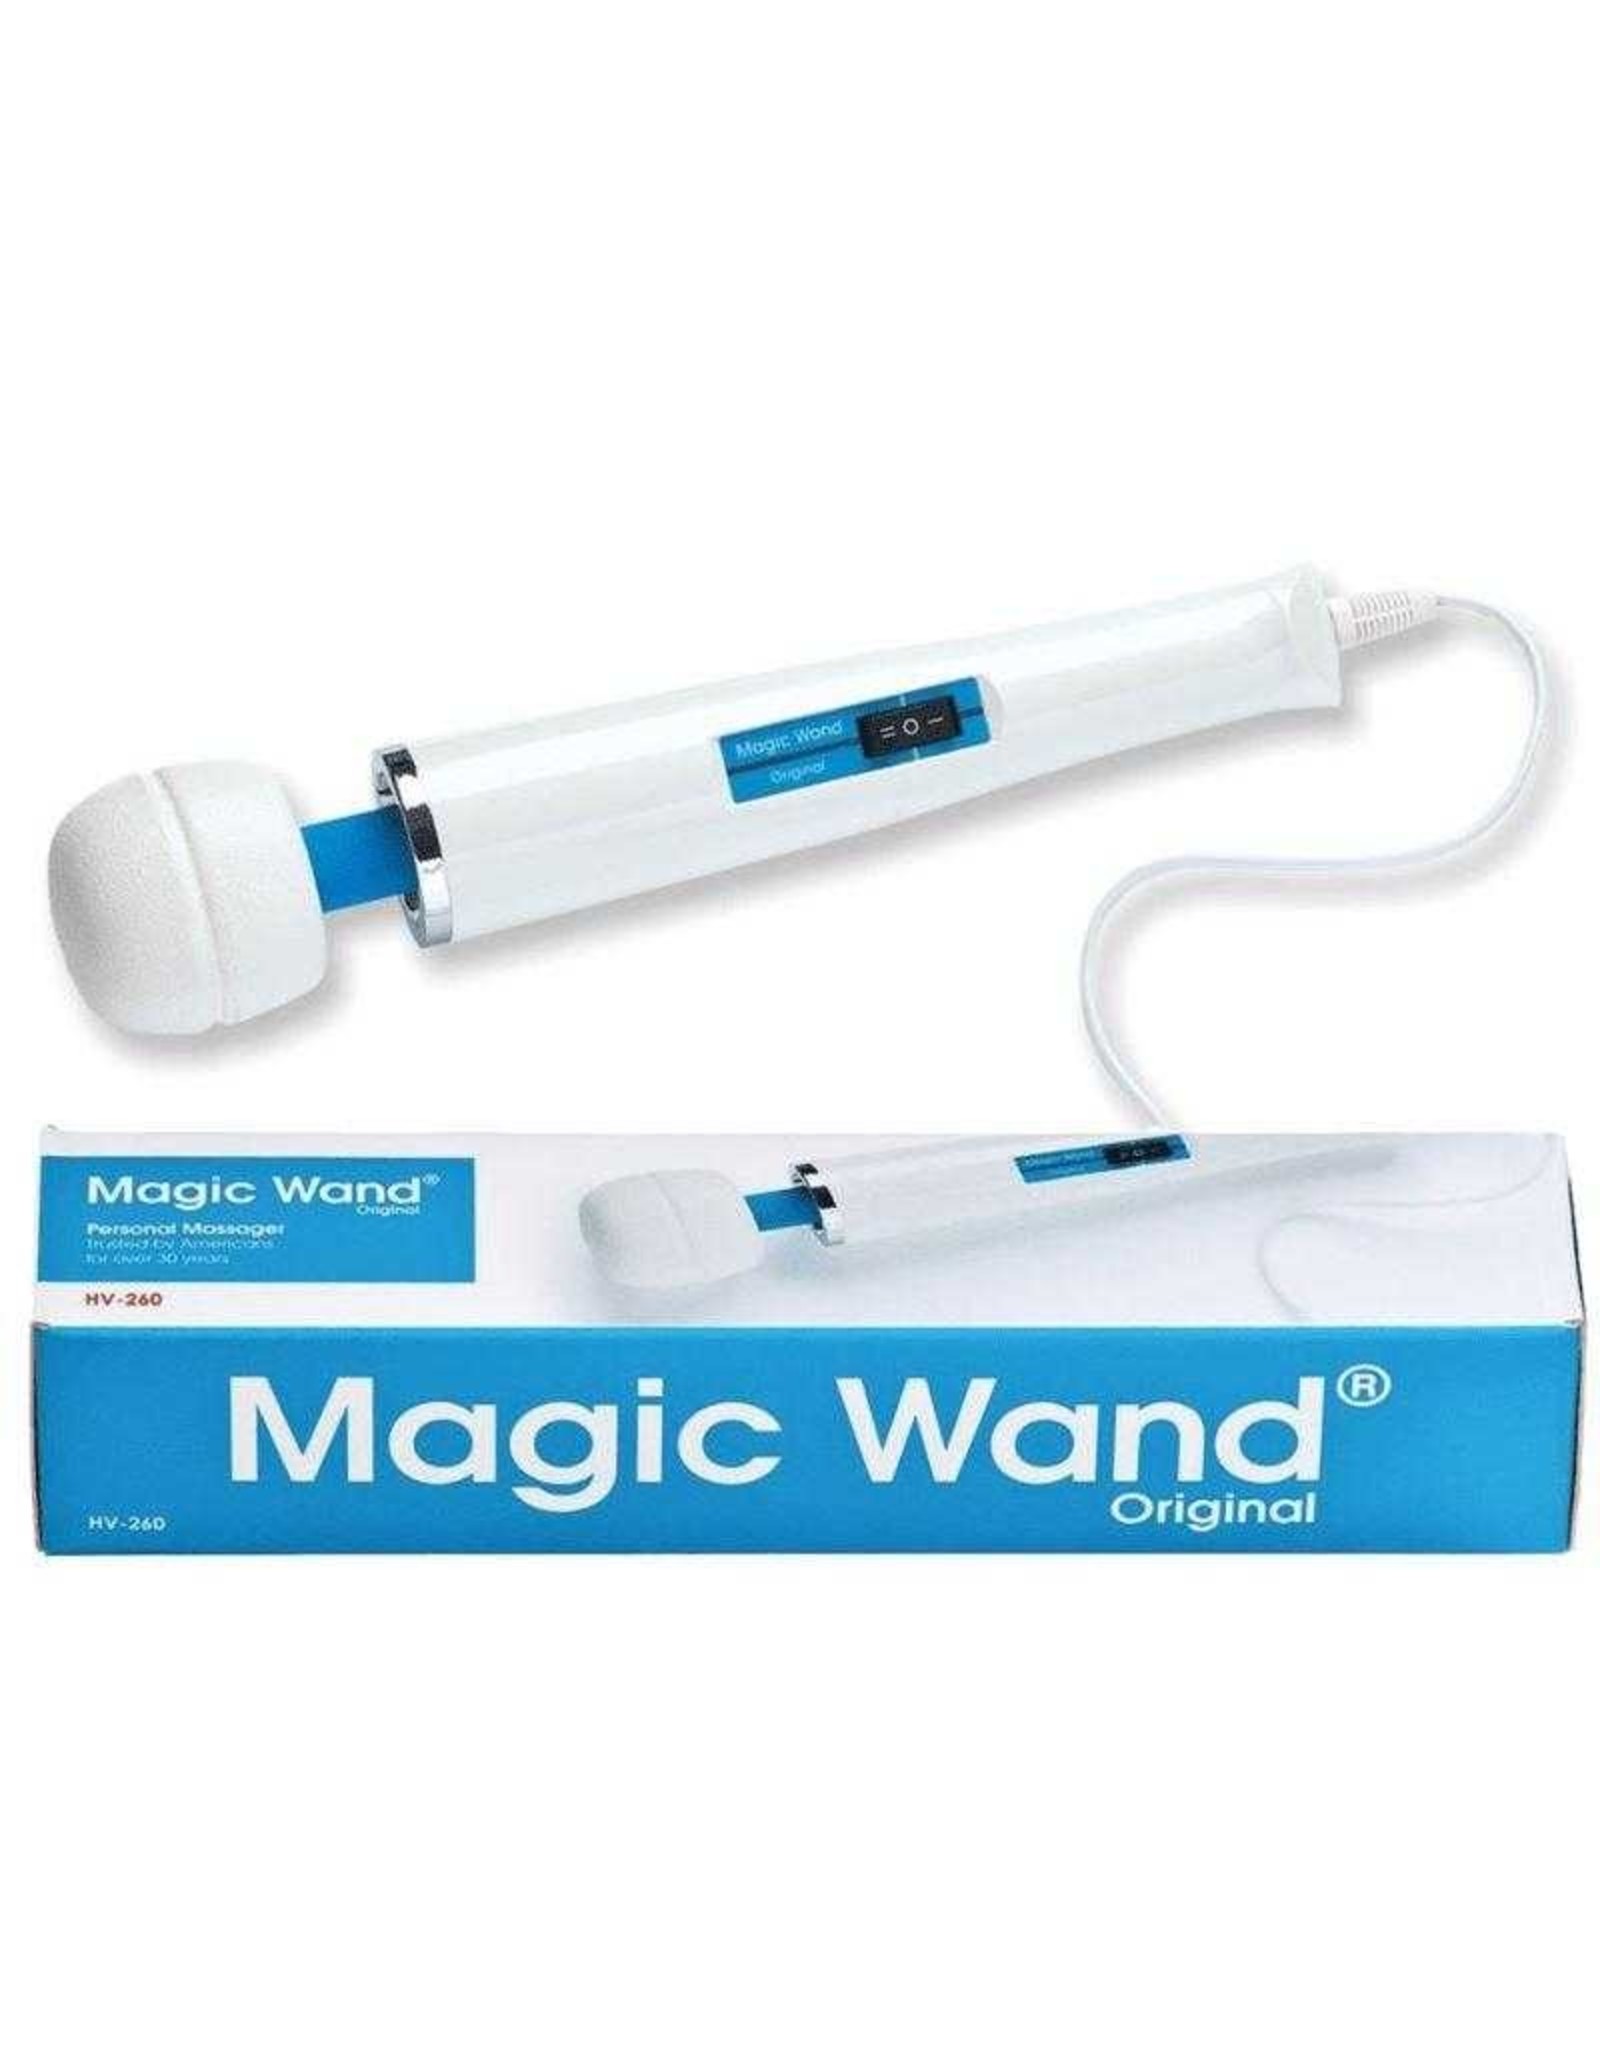 Magic Wand + The Original Magic Wand with Free Wand Essentials